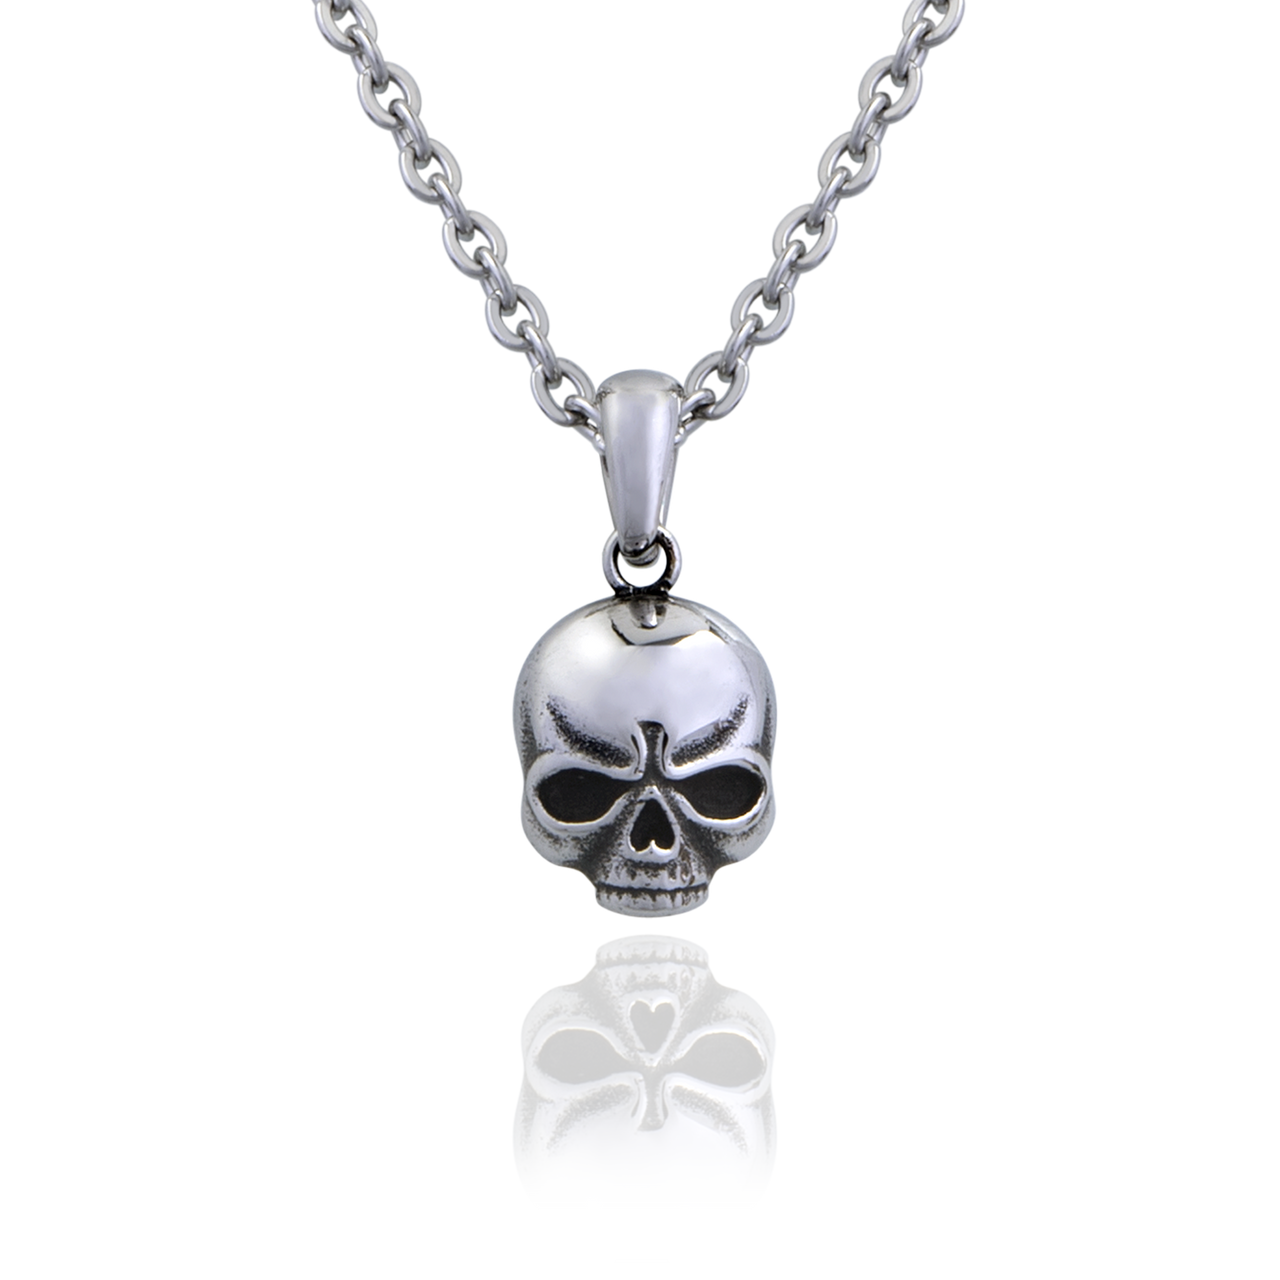 Tempest Skull Necklace